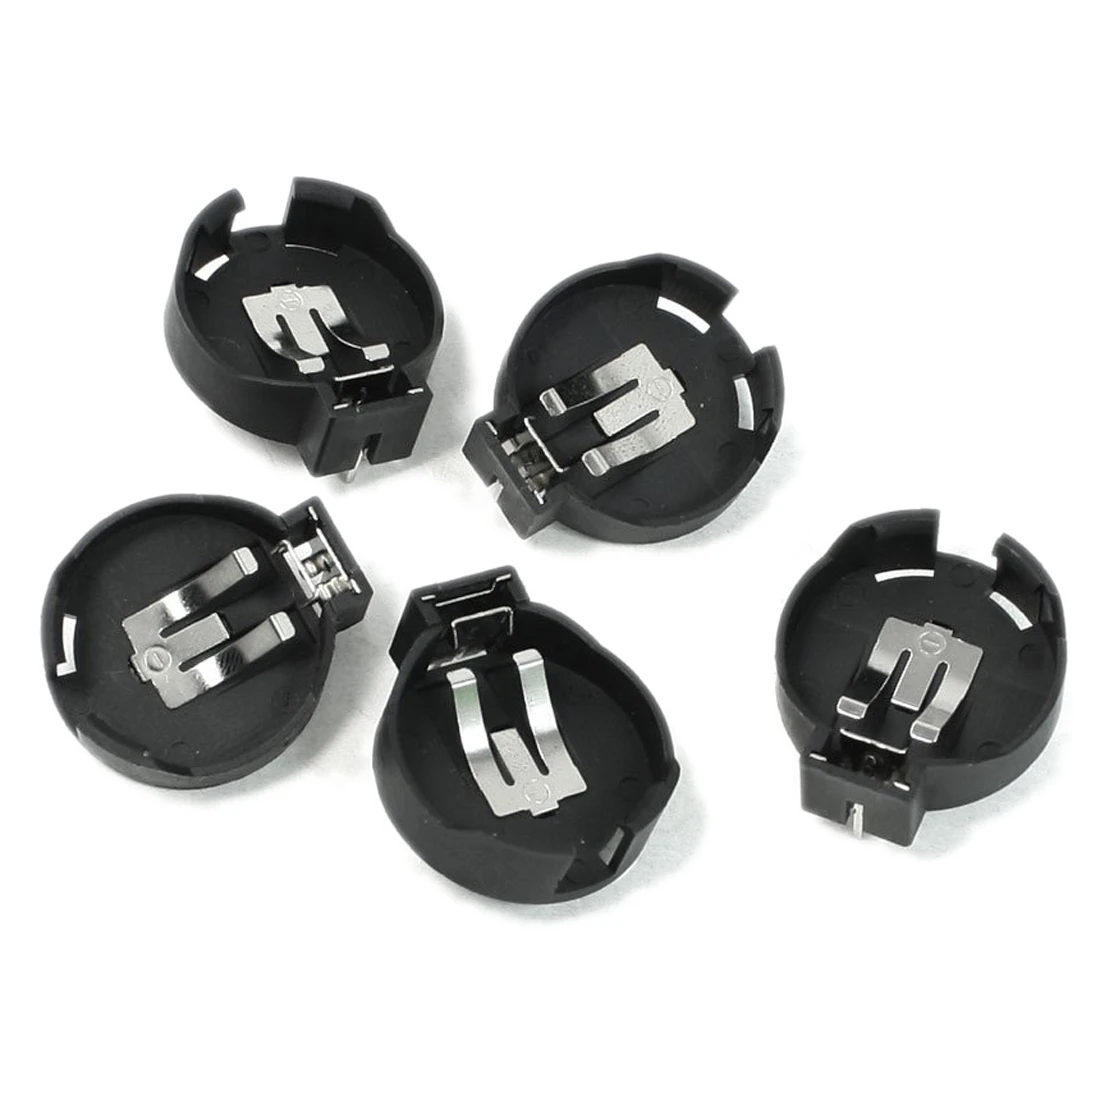 PCB Hole Plugging Type CR/LIR2450 Button Cell Battery Holder 5 Pcs Black J7J1